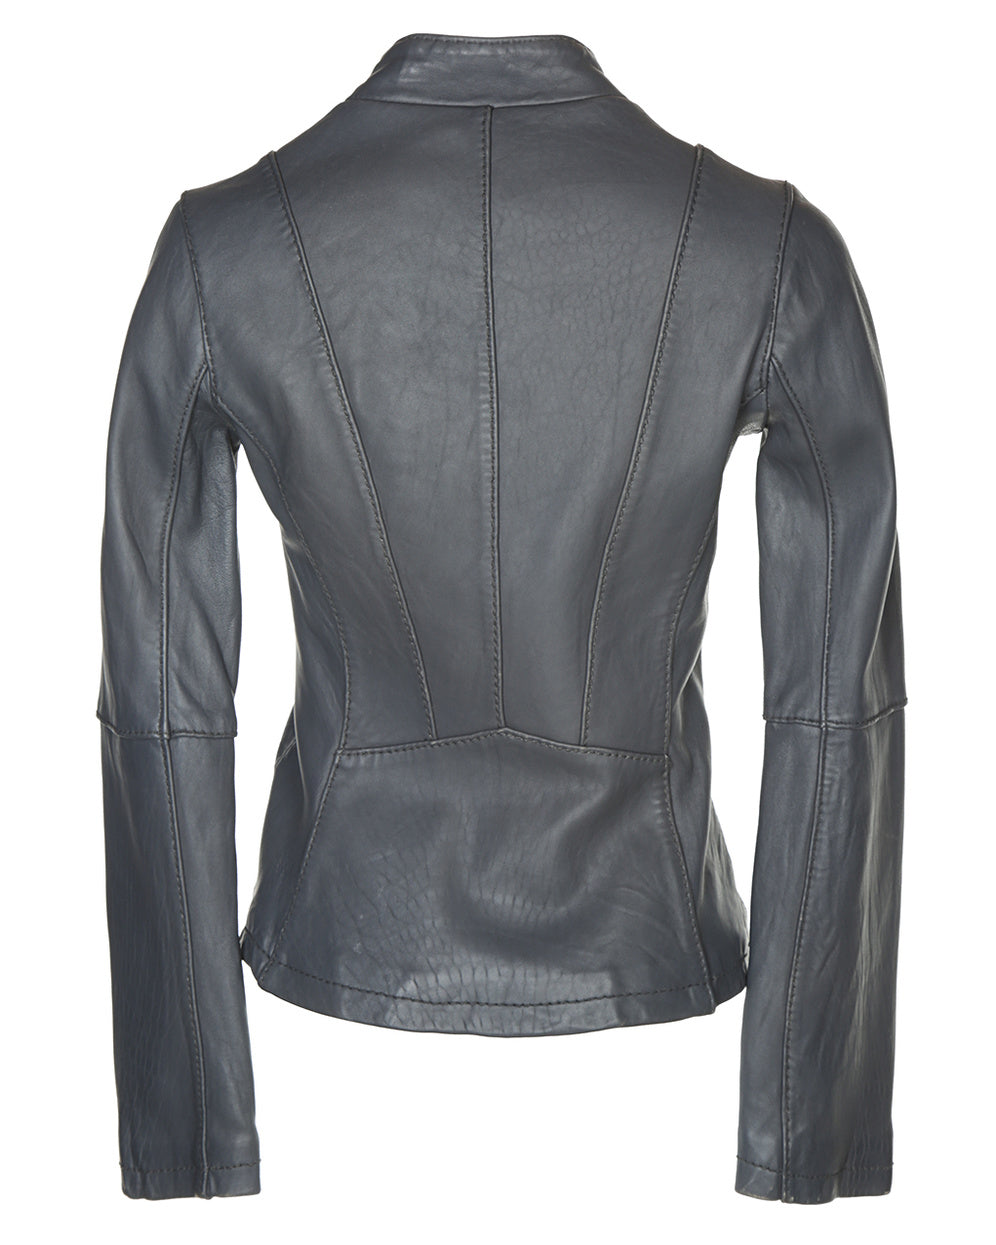 Michael Kors Grey Leather Biker Jacket - XS